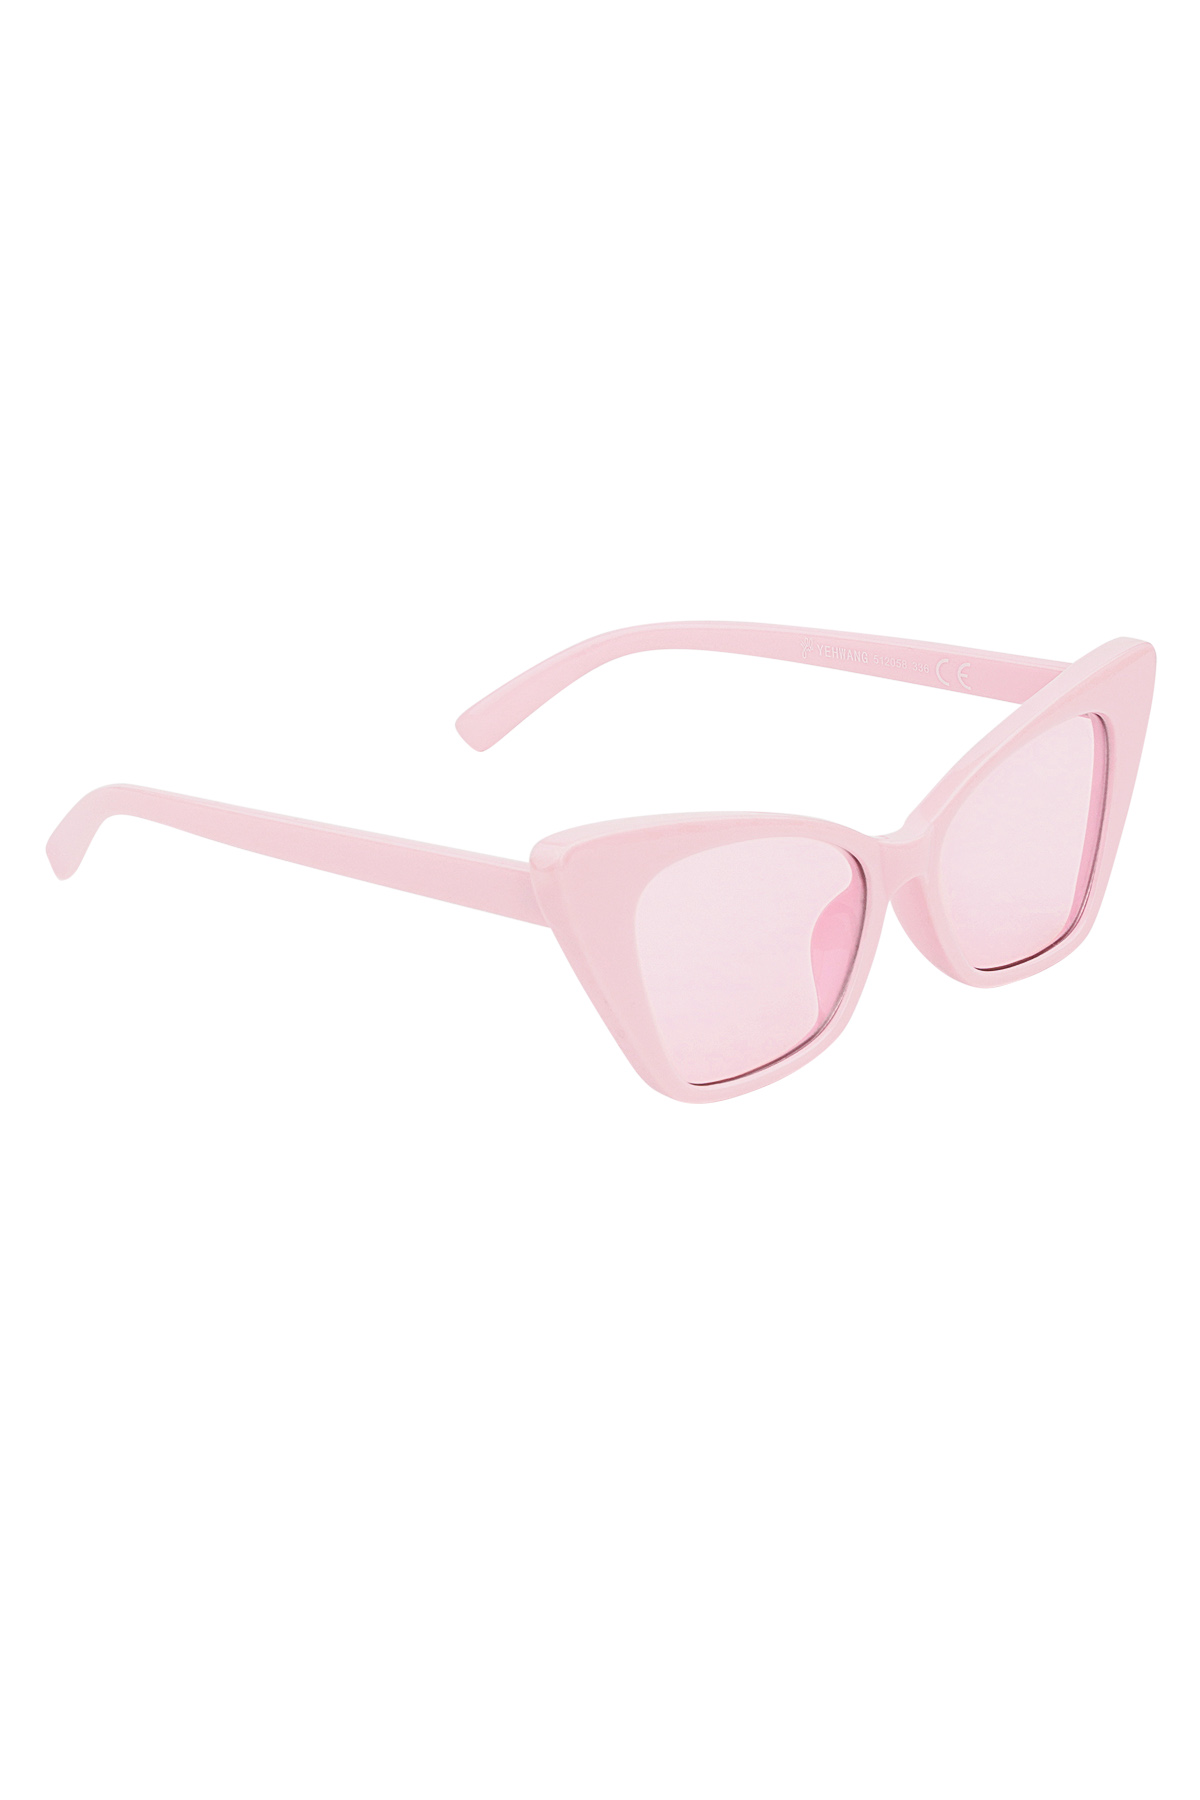 Sunglasses monochrome frame - pink